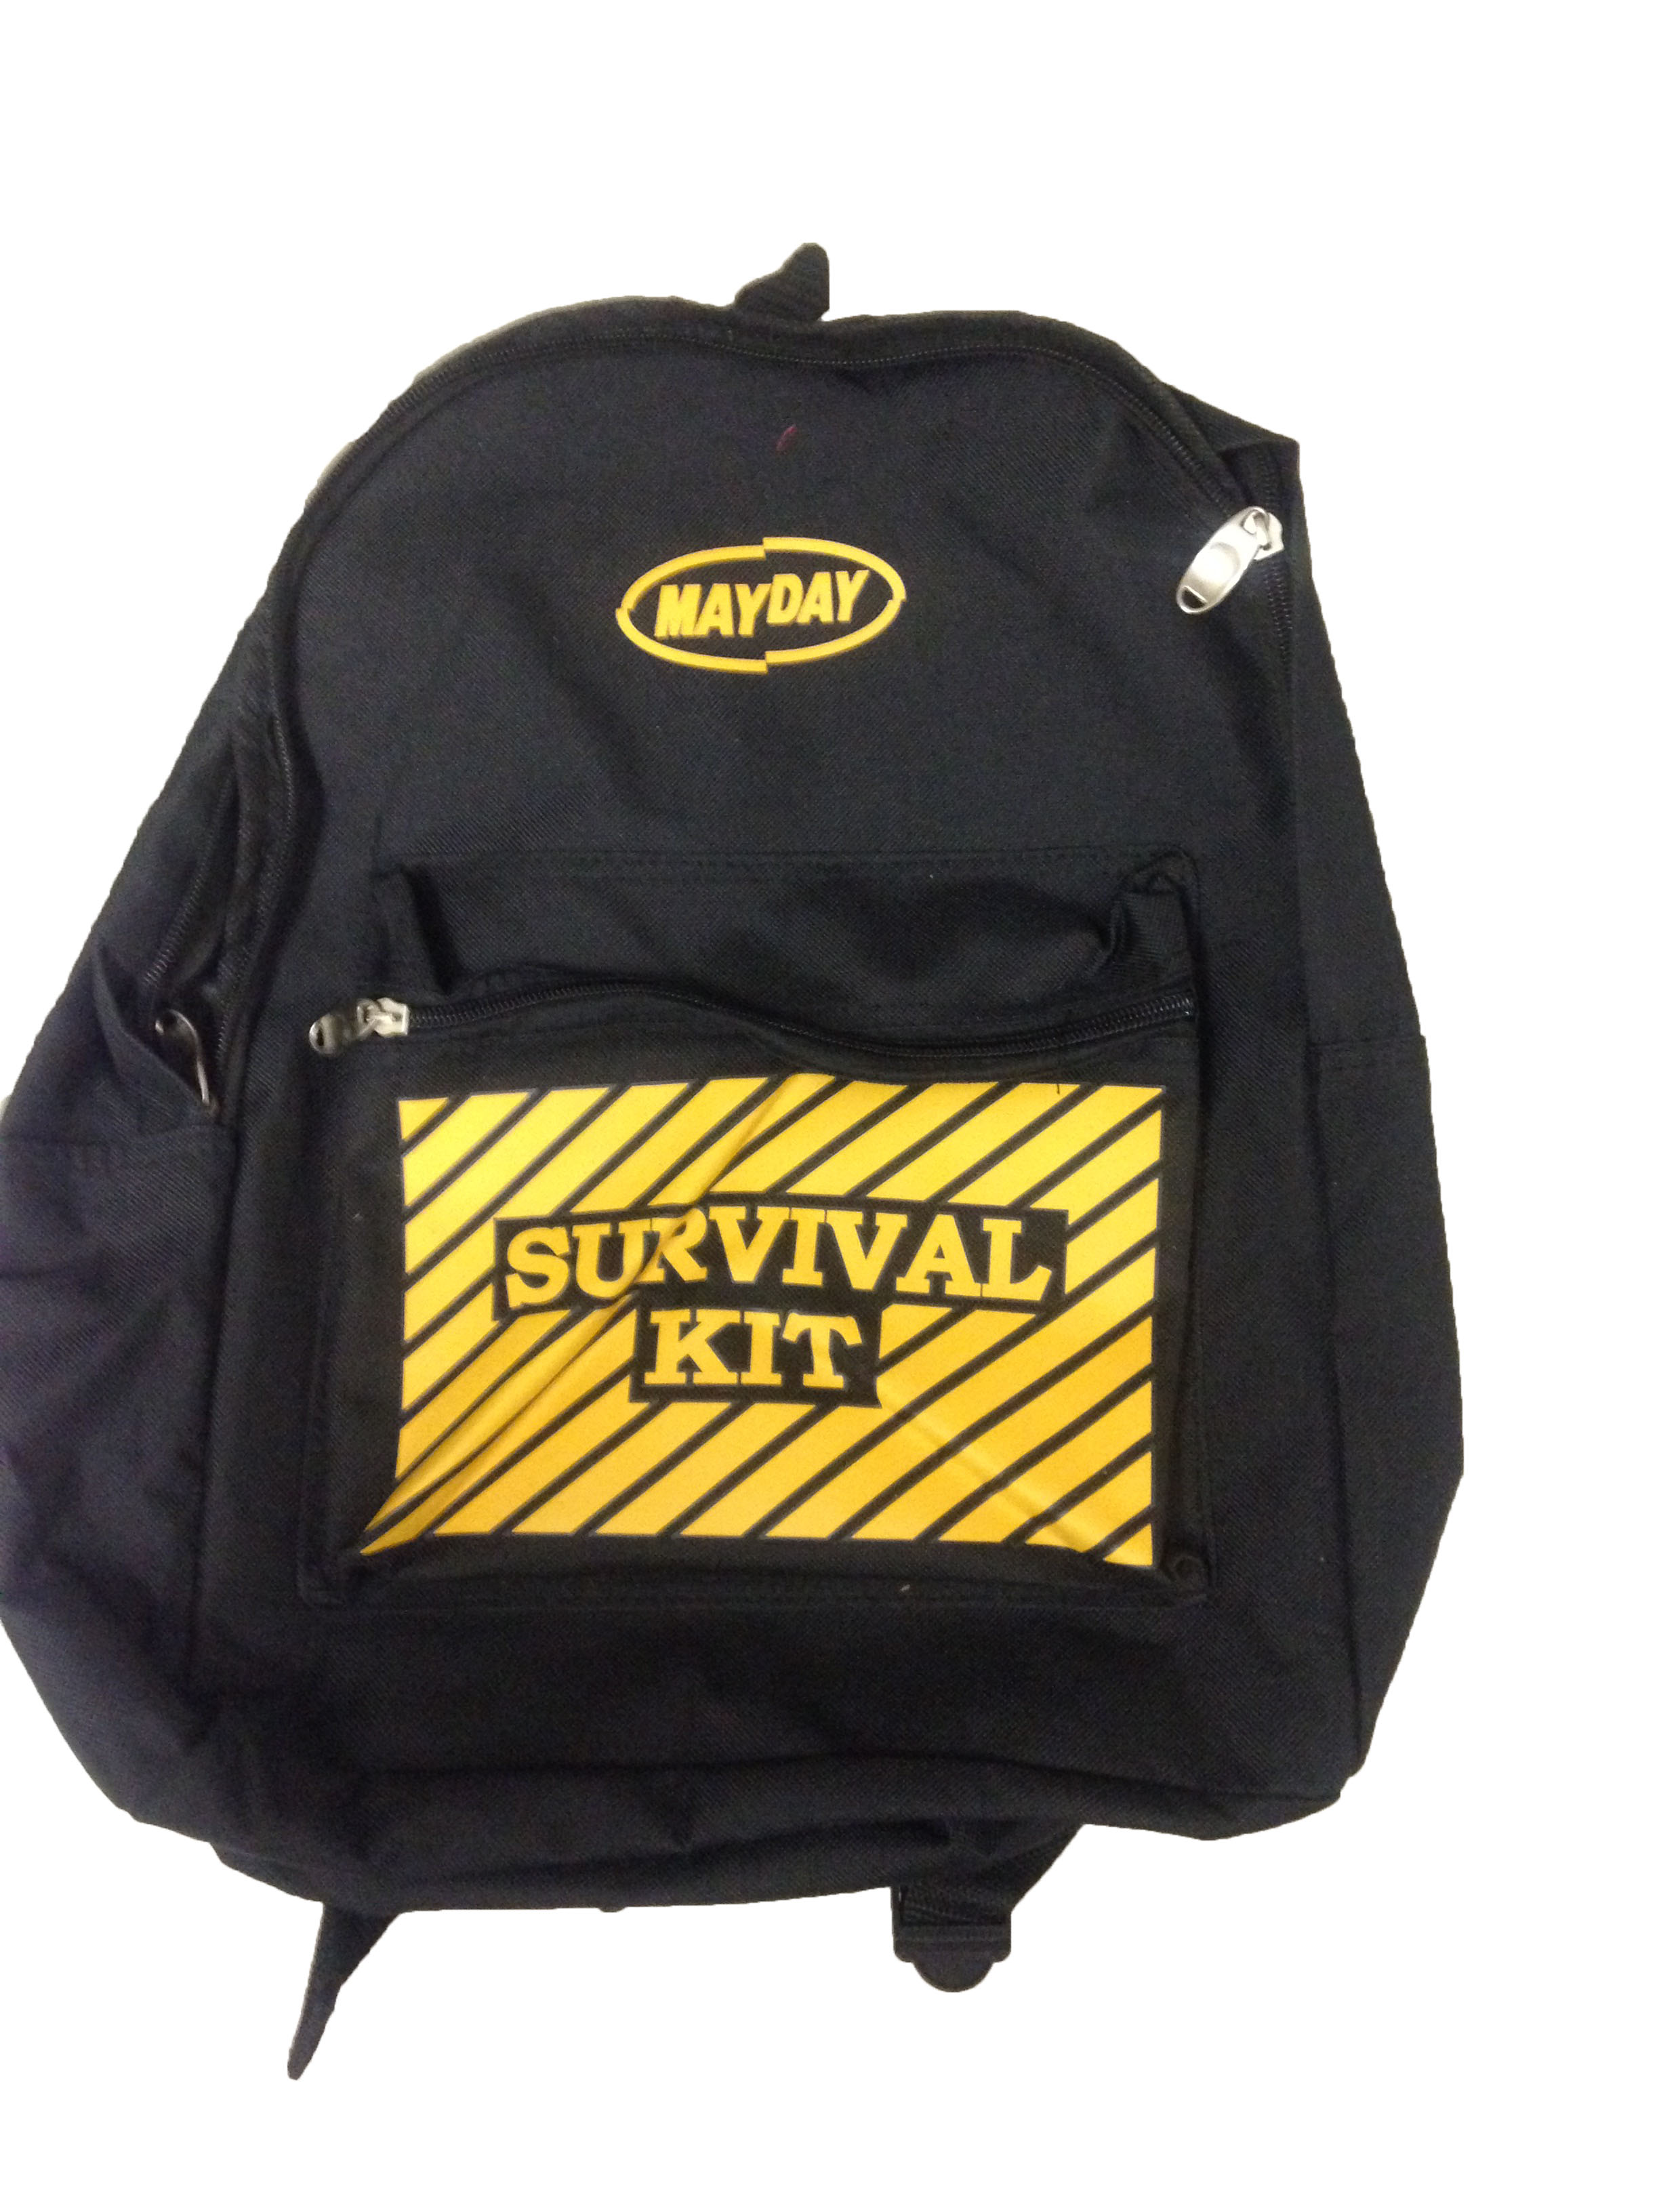 Survival Backpack image